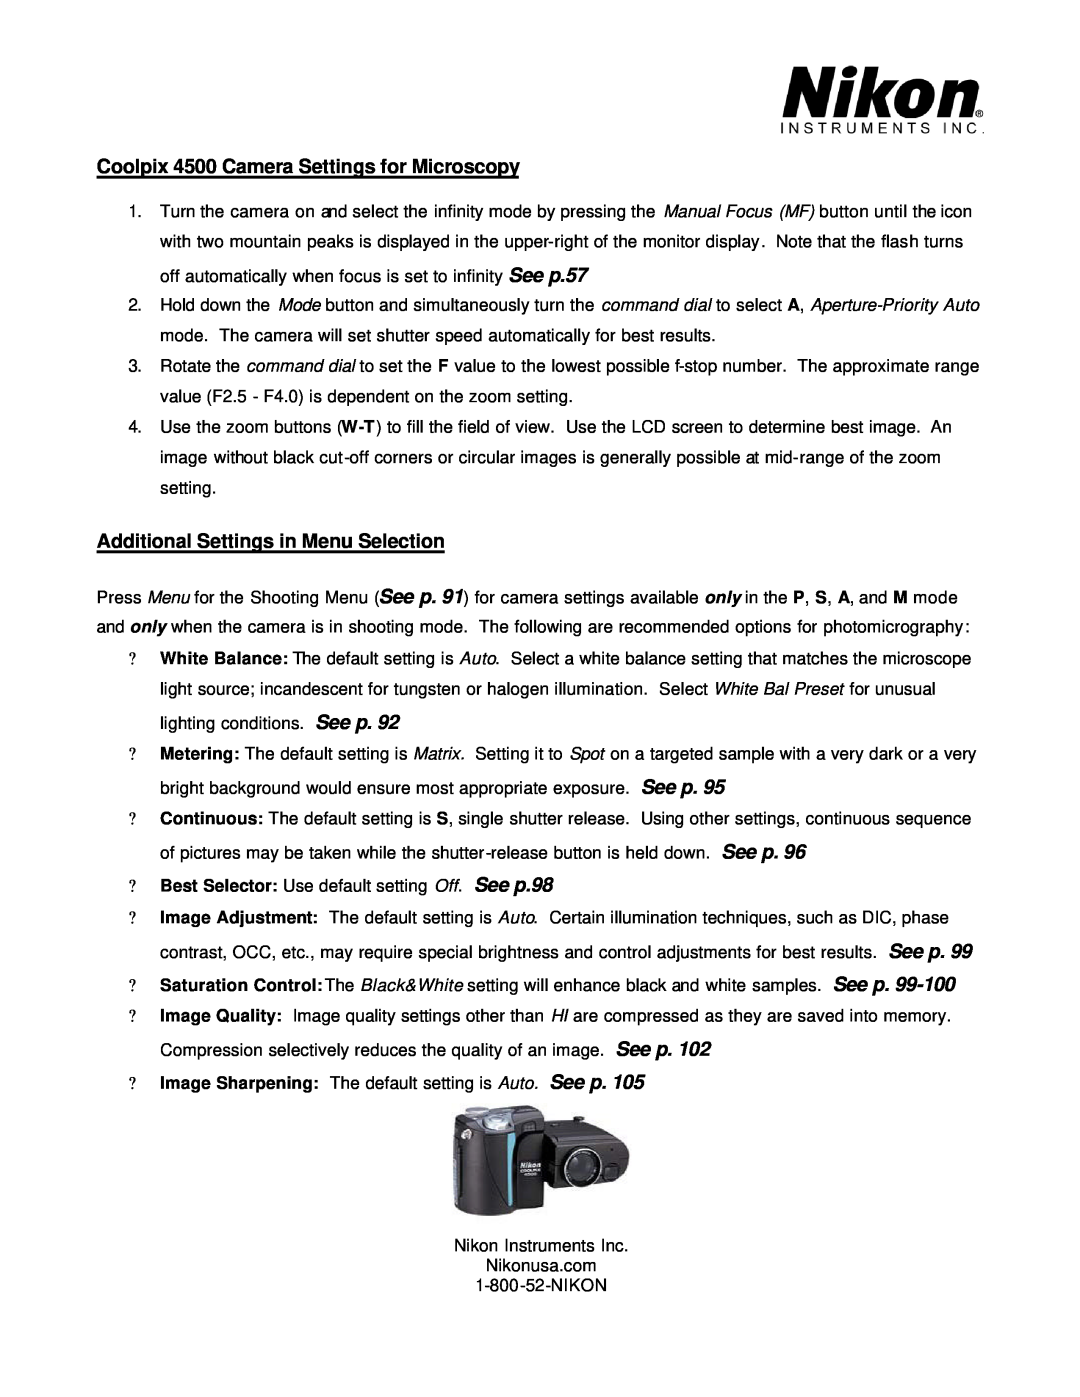 Nikon user manual Coolpix 4500 Camera Settings for Microscopy, Additional Settings in Menu Selection 